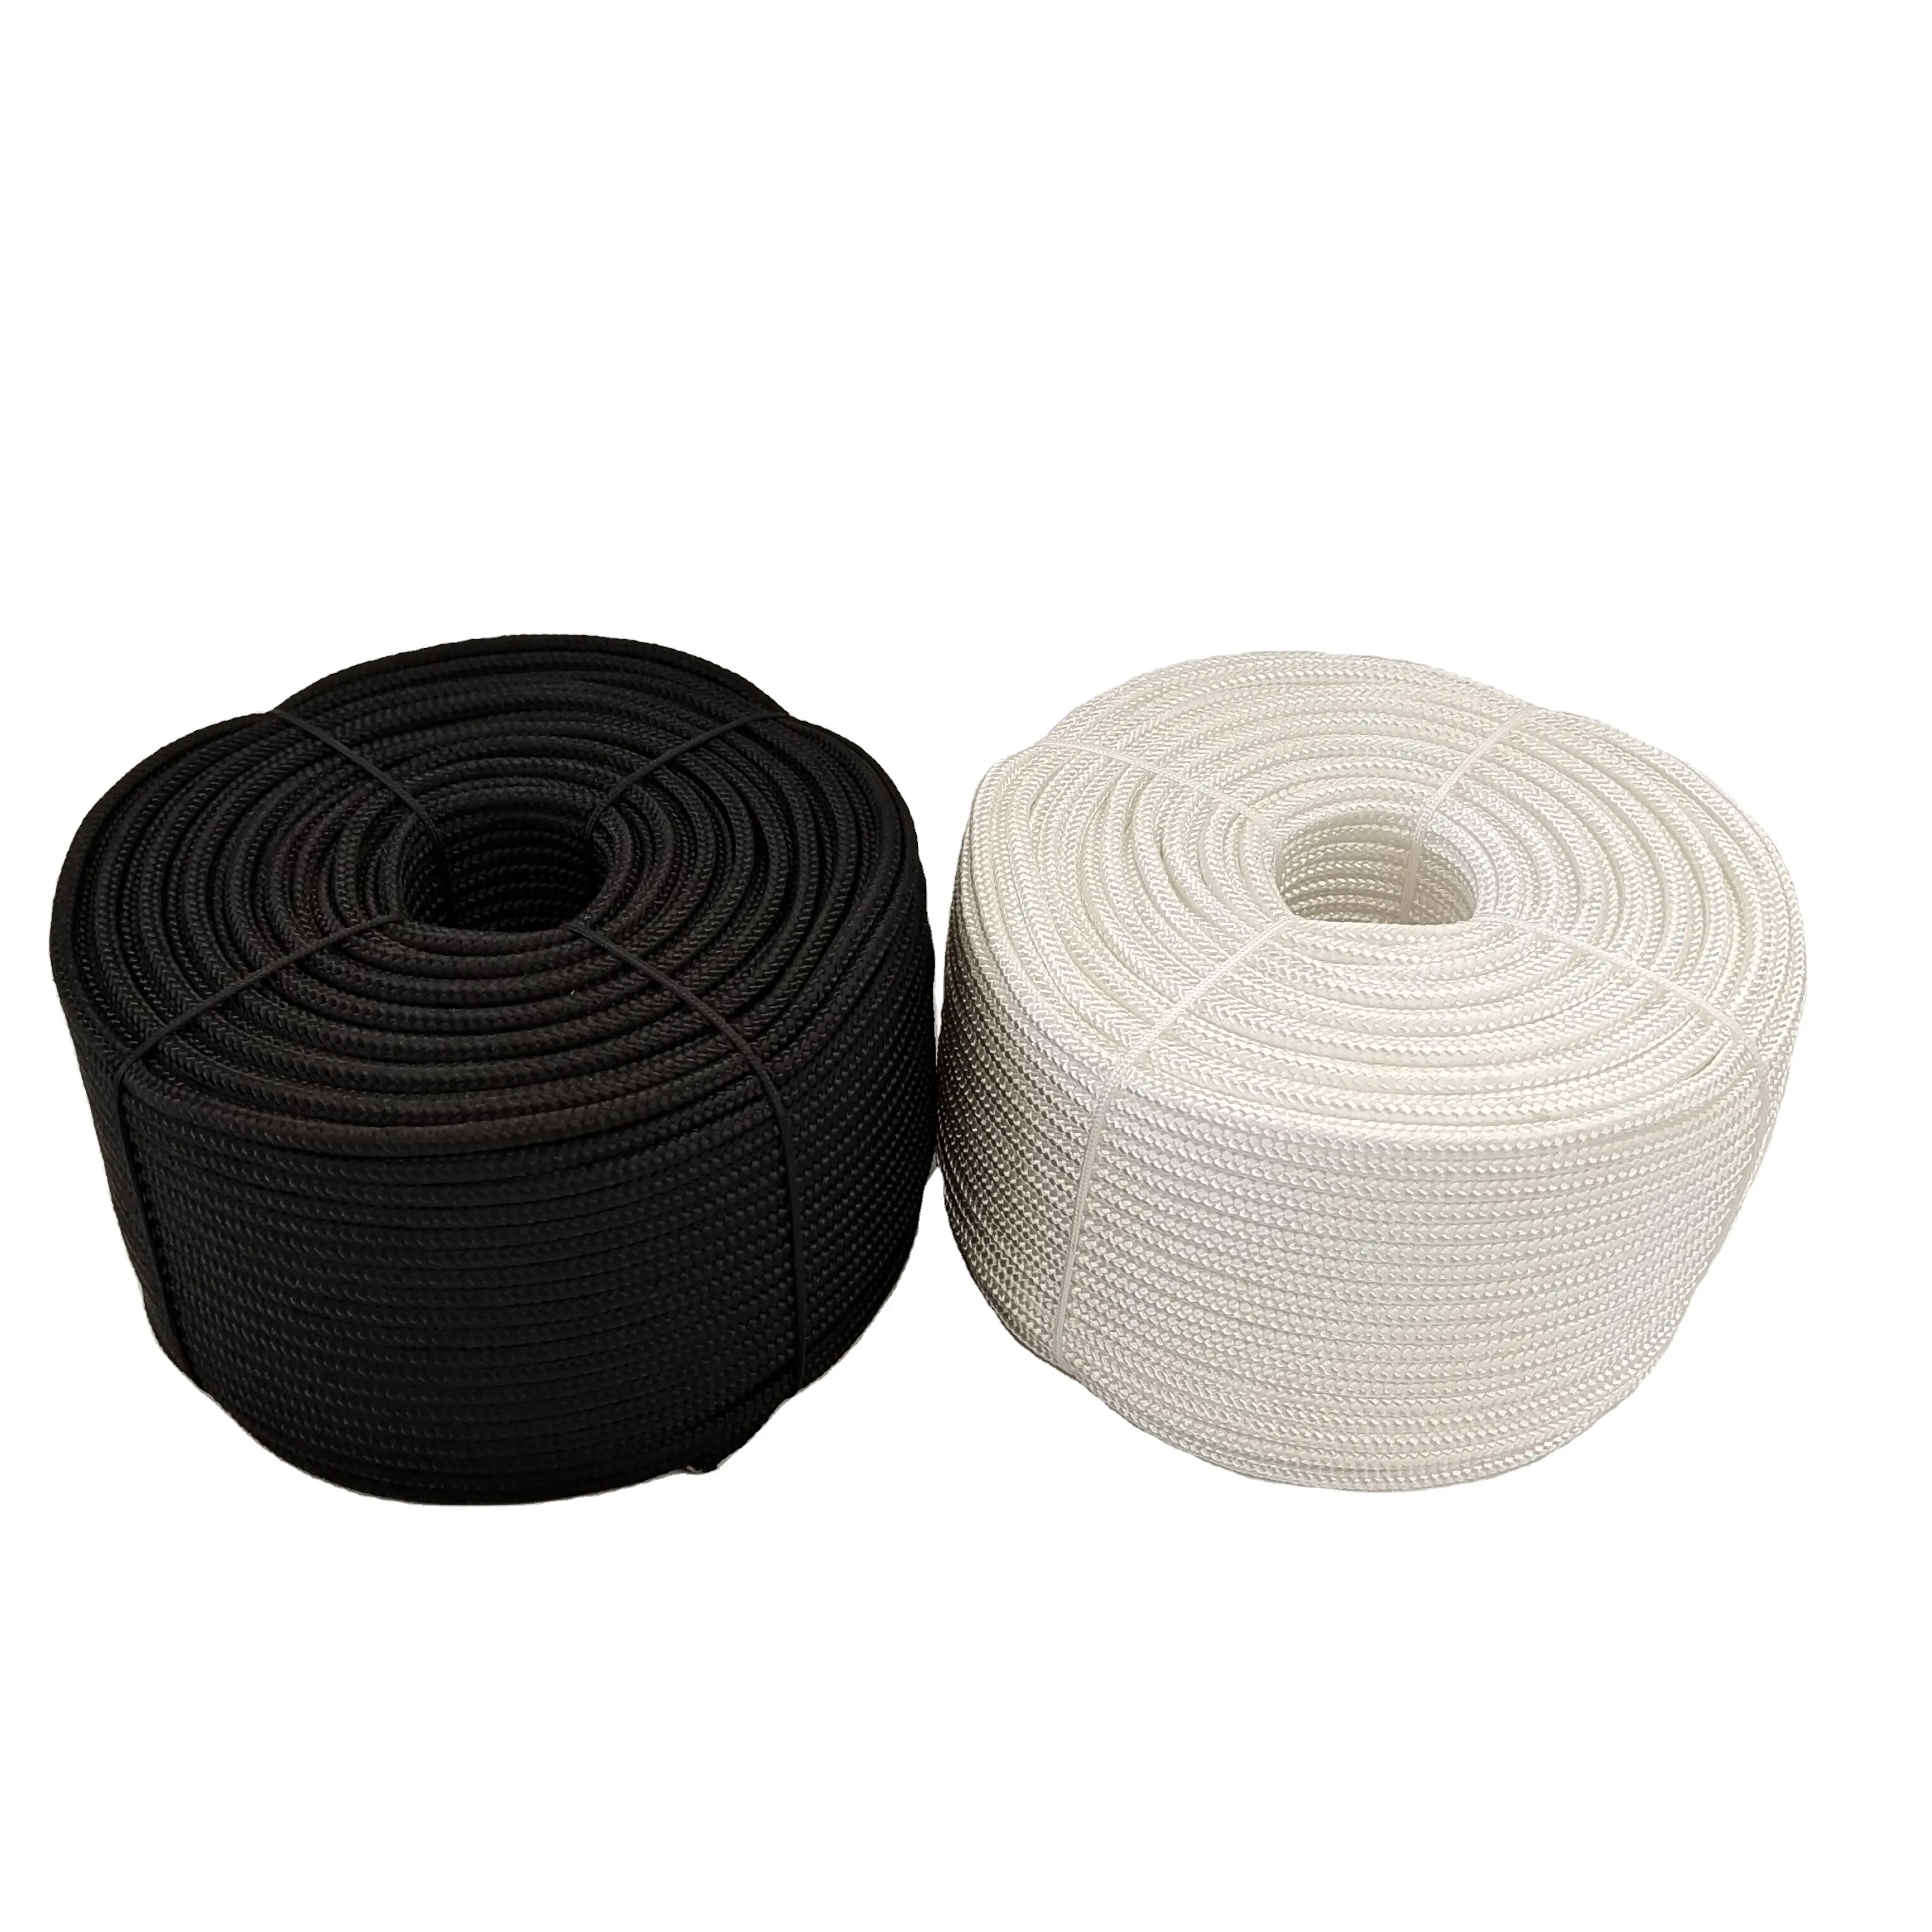 Kabel tali poli nilon poliester dacron kepang luar ruangan, putih hitam 5mm 6mm 7mm 8mm untuk tiang bendera berkemah ikat tarik